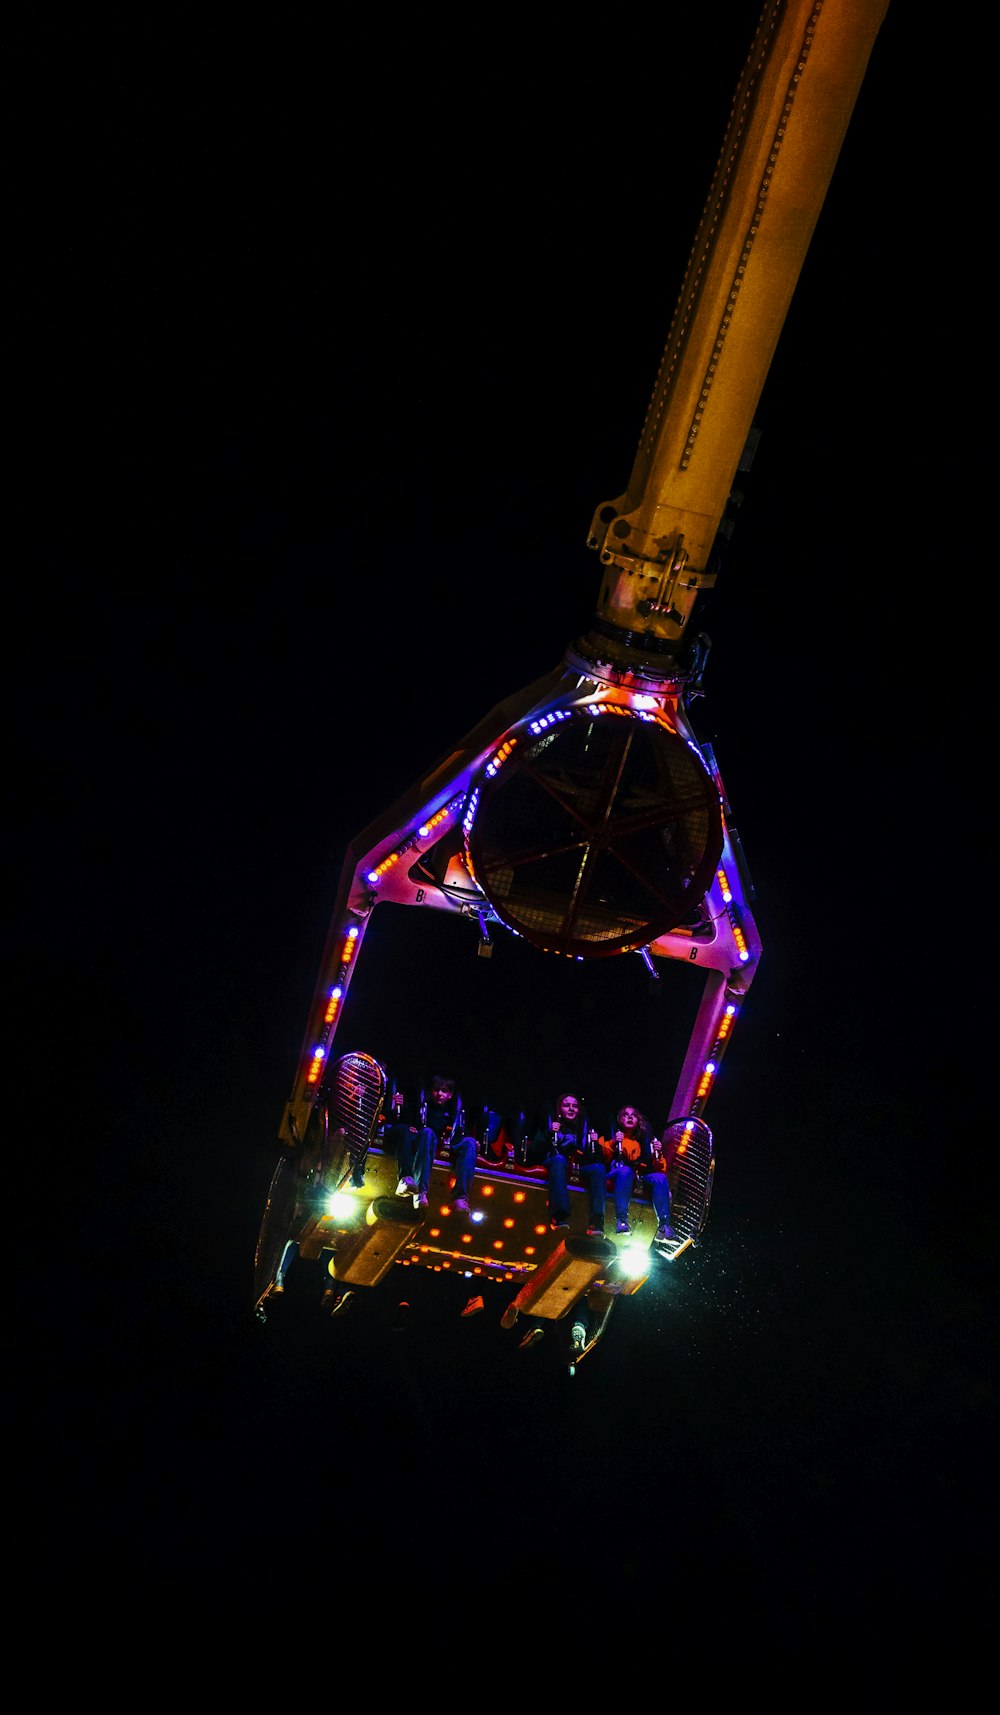 a ferris wheel lit up at night in the dark